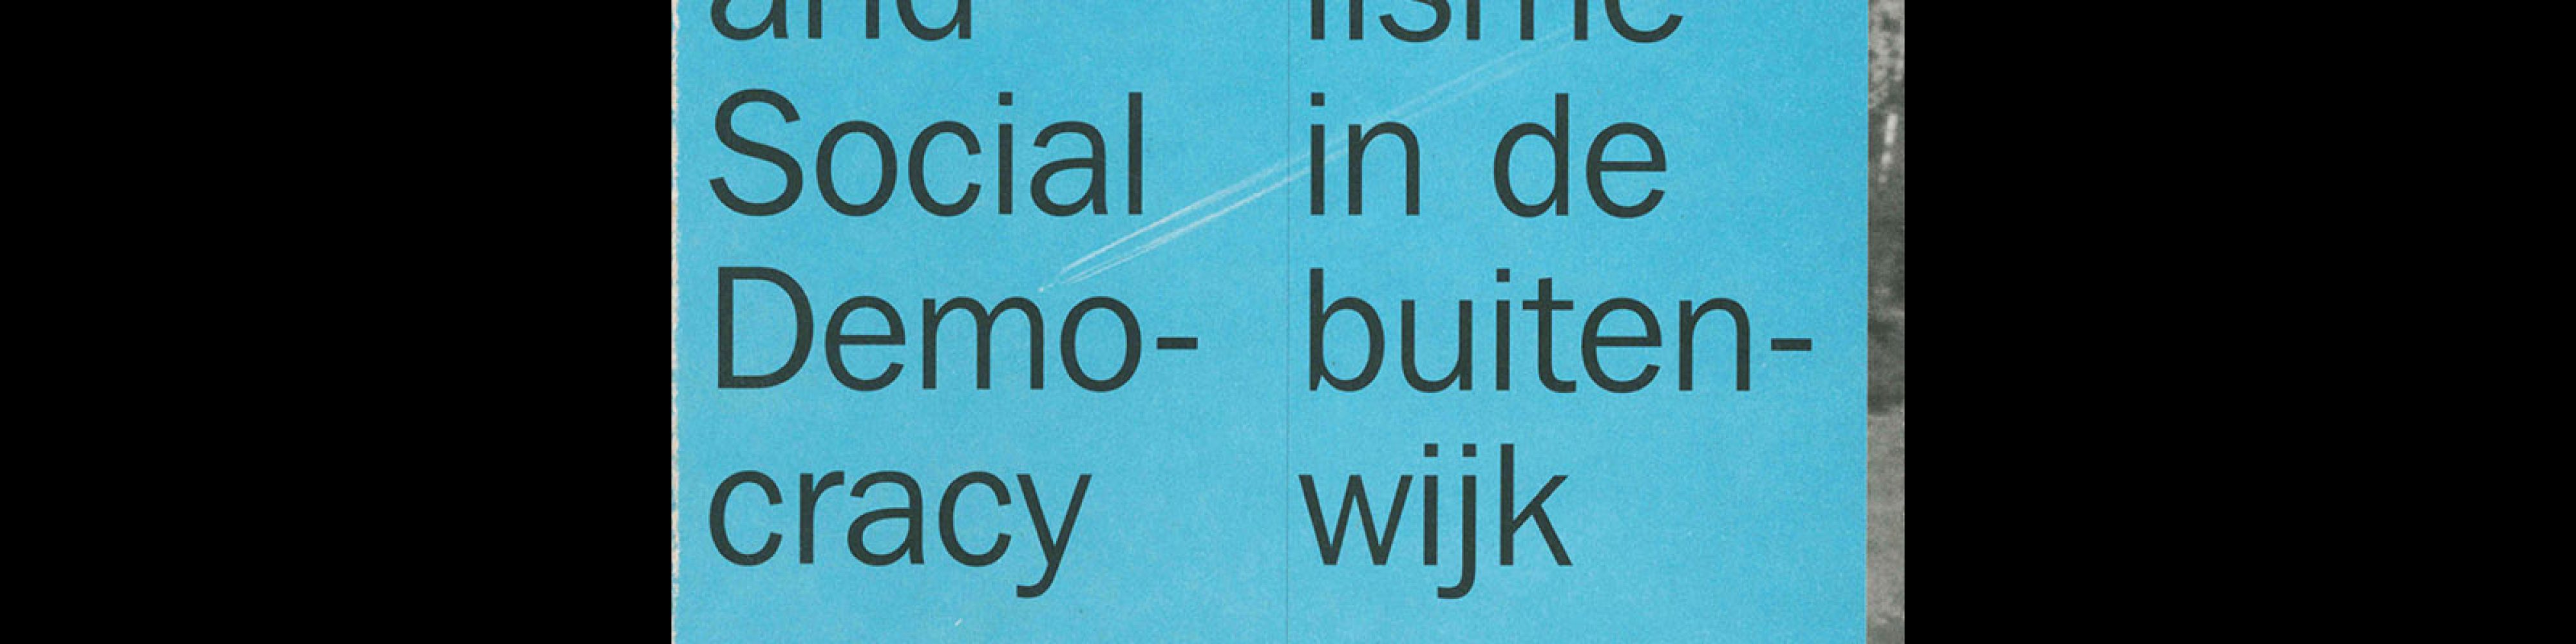 OASE 61, 2003. Designed by Karel Martens, Mikhail Illiatov, Werkplaats Typografie